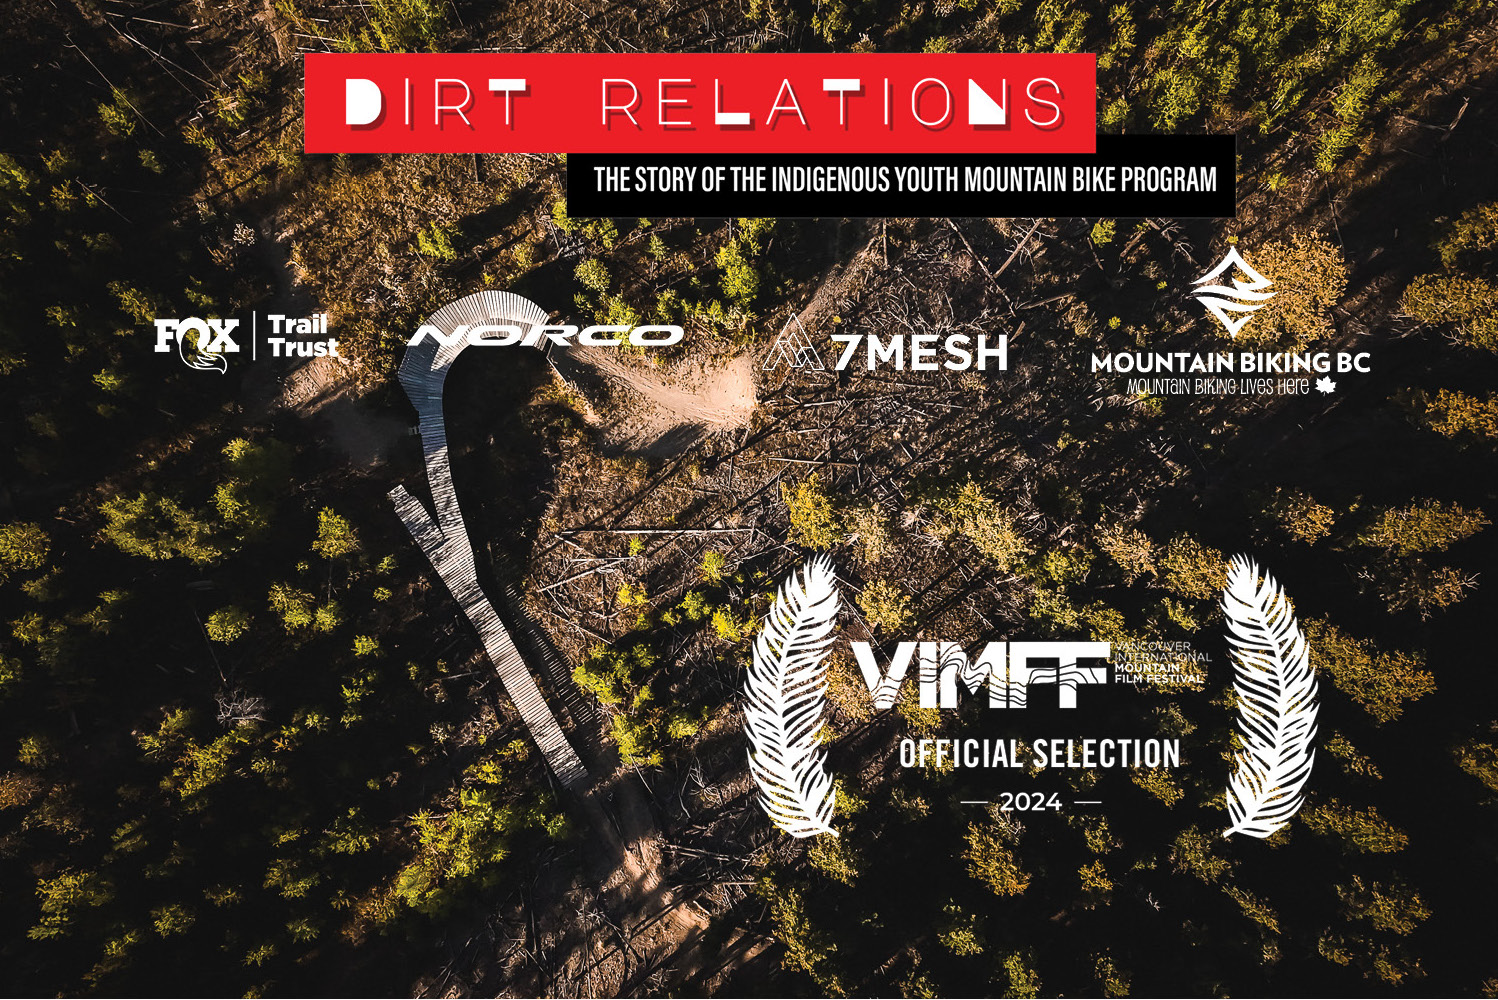 Dirt Relations Documentary